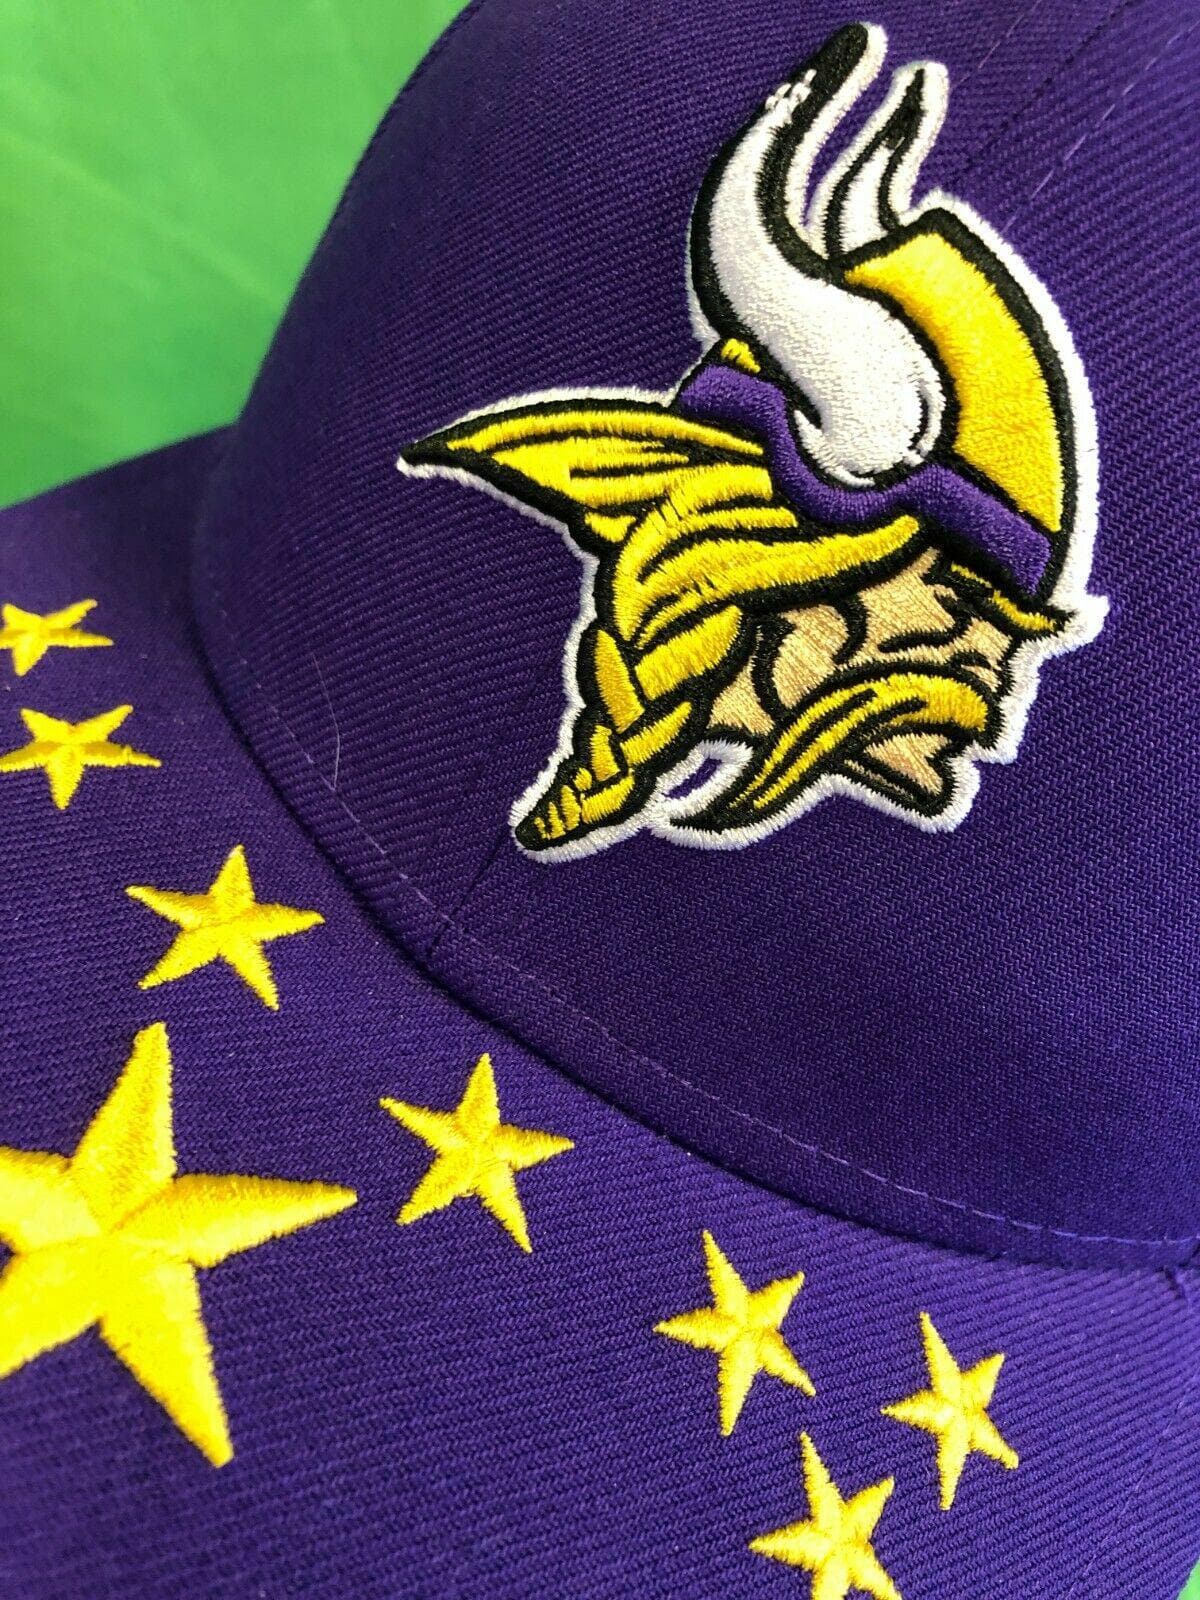 NFL Minnesota Vikings New Era 59FIFTY 2019 Draft Hat/Cap NWT 7-1/8